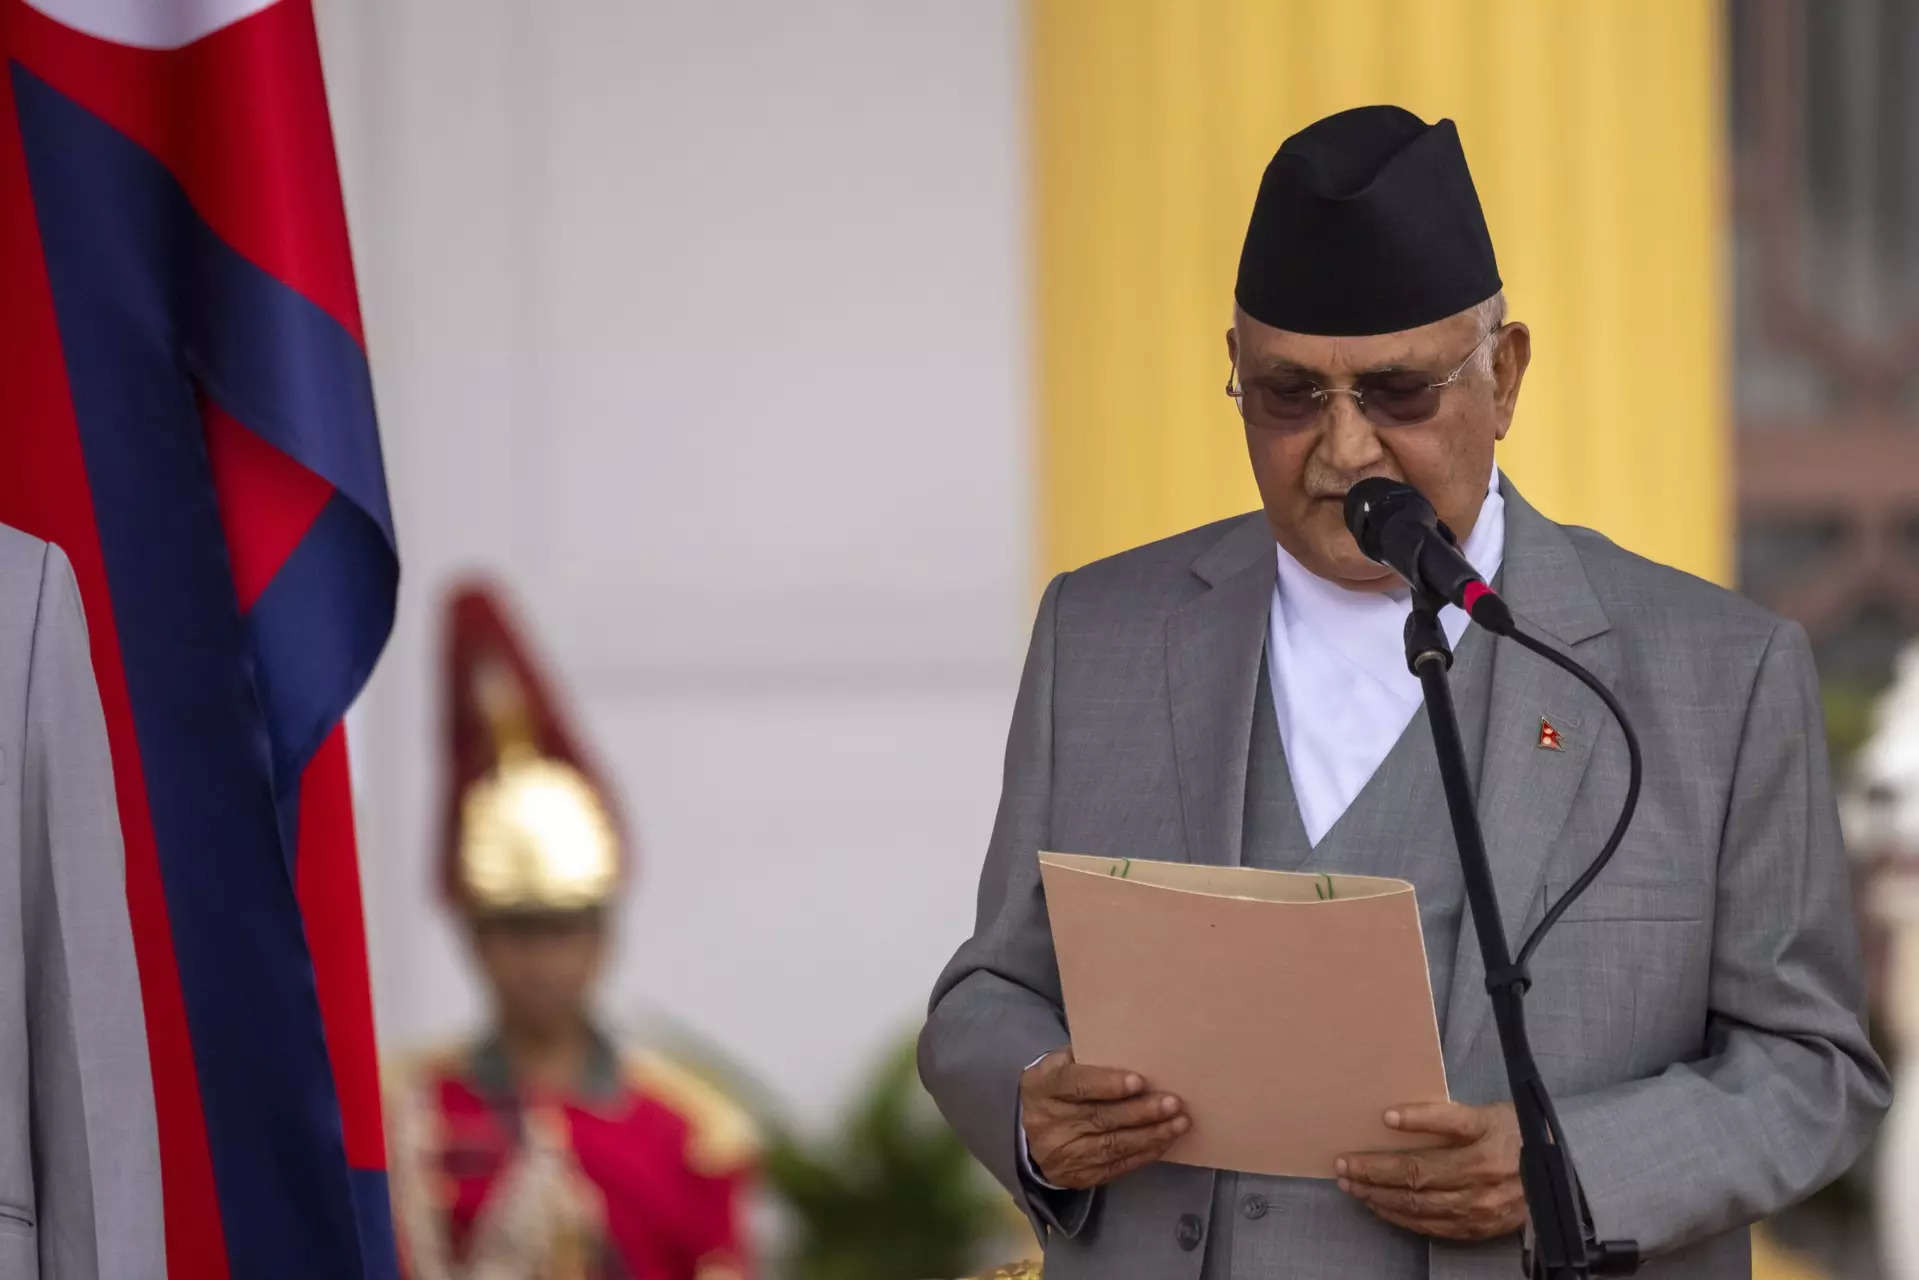 China keen to pursue Belt and Road projects in Nepal, Premier Li tells new PM Oli 